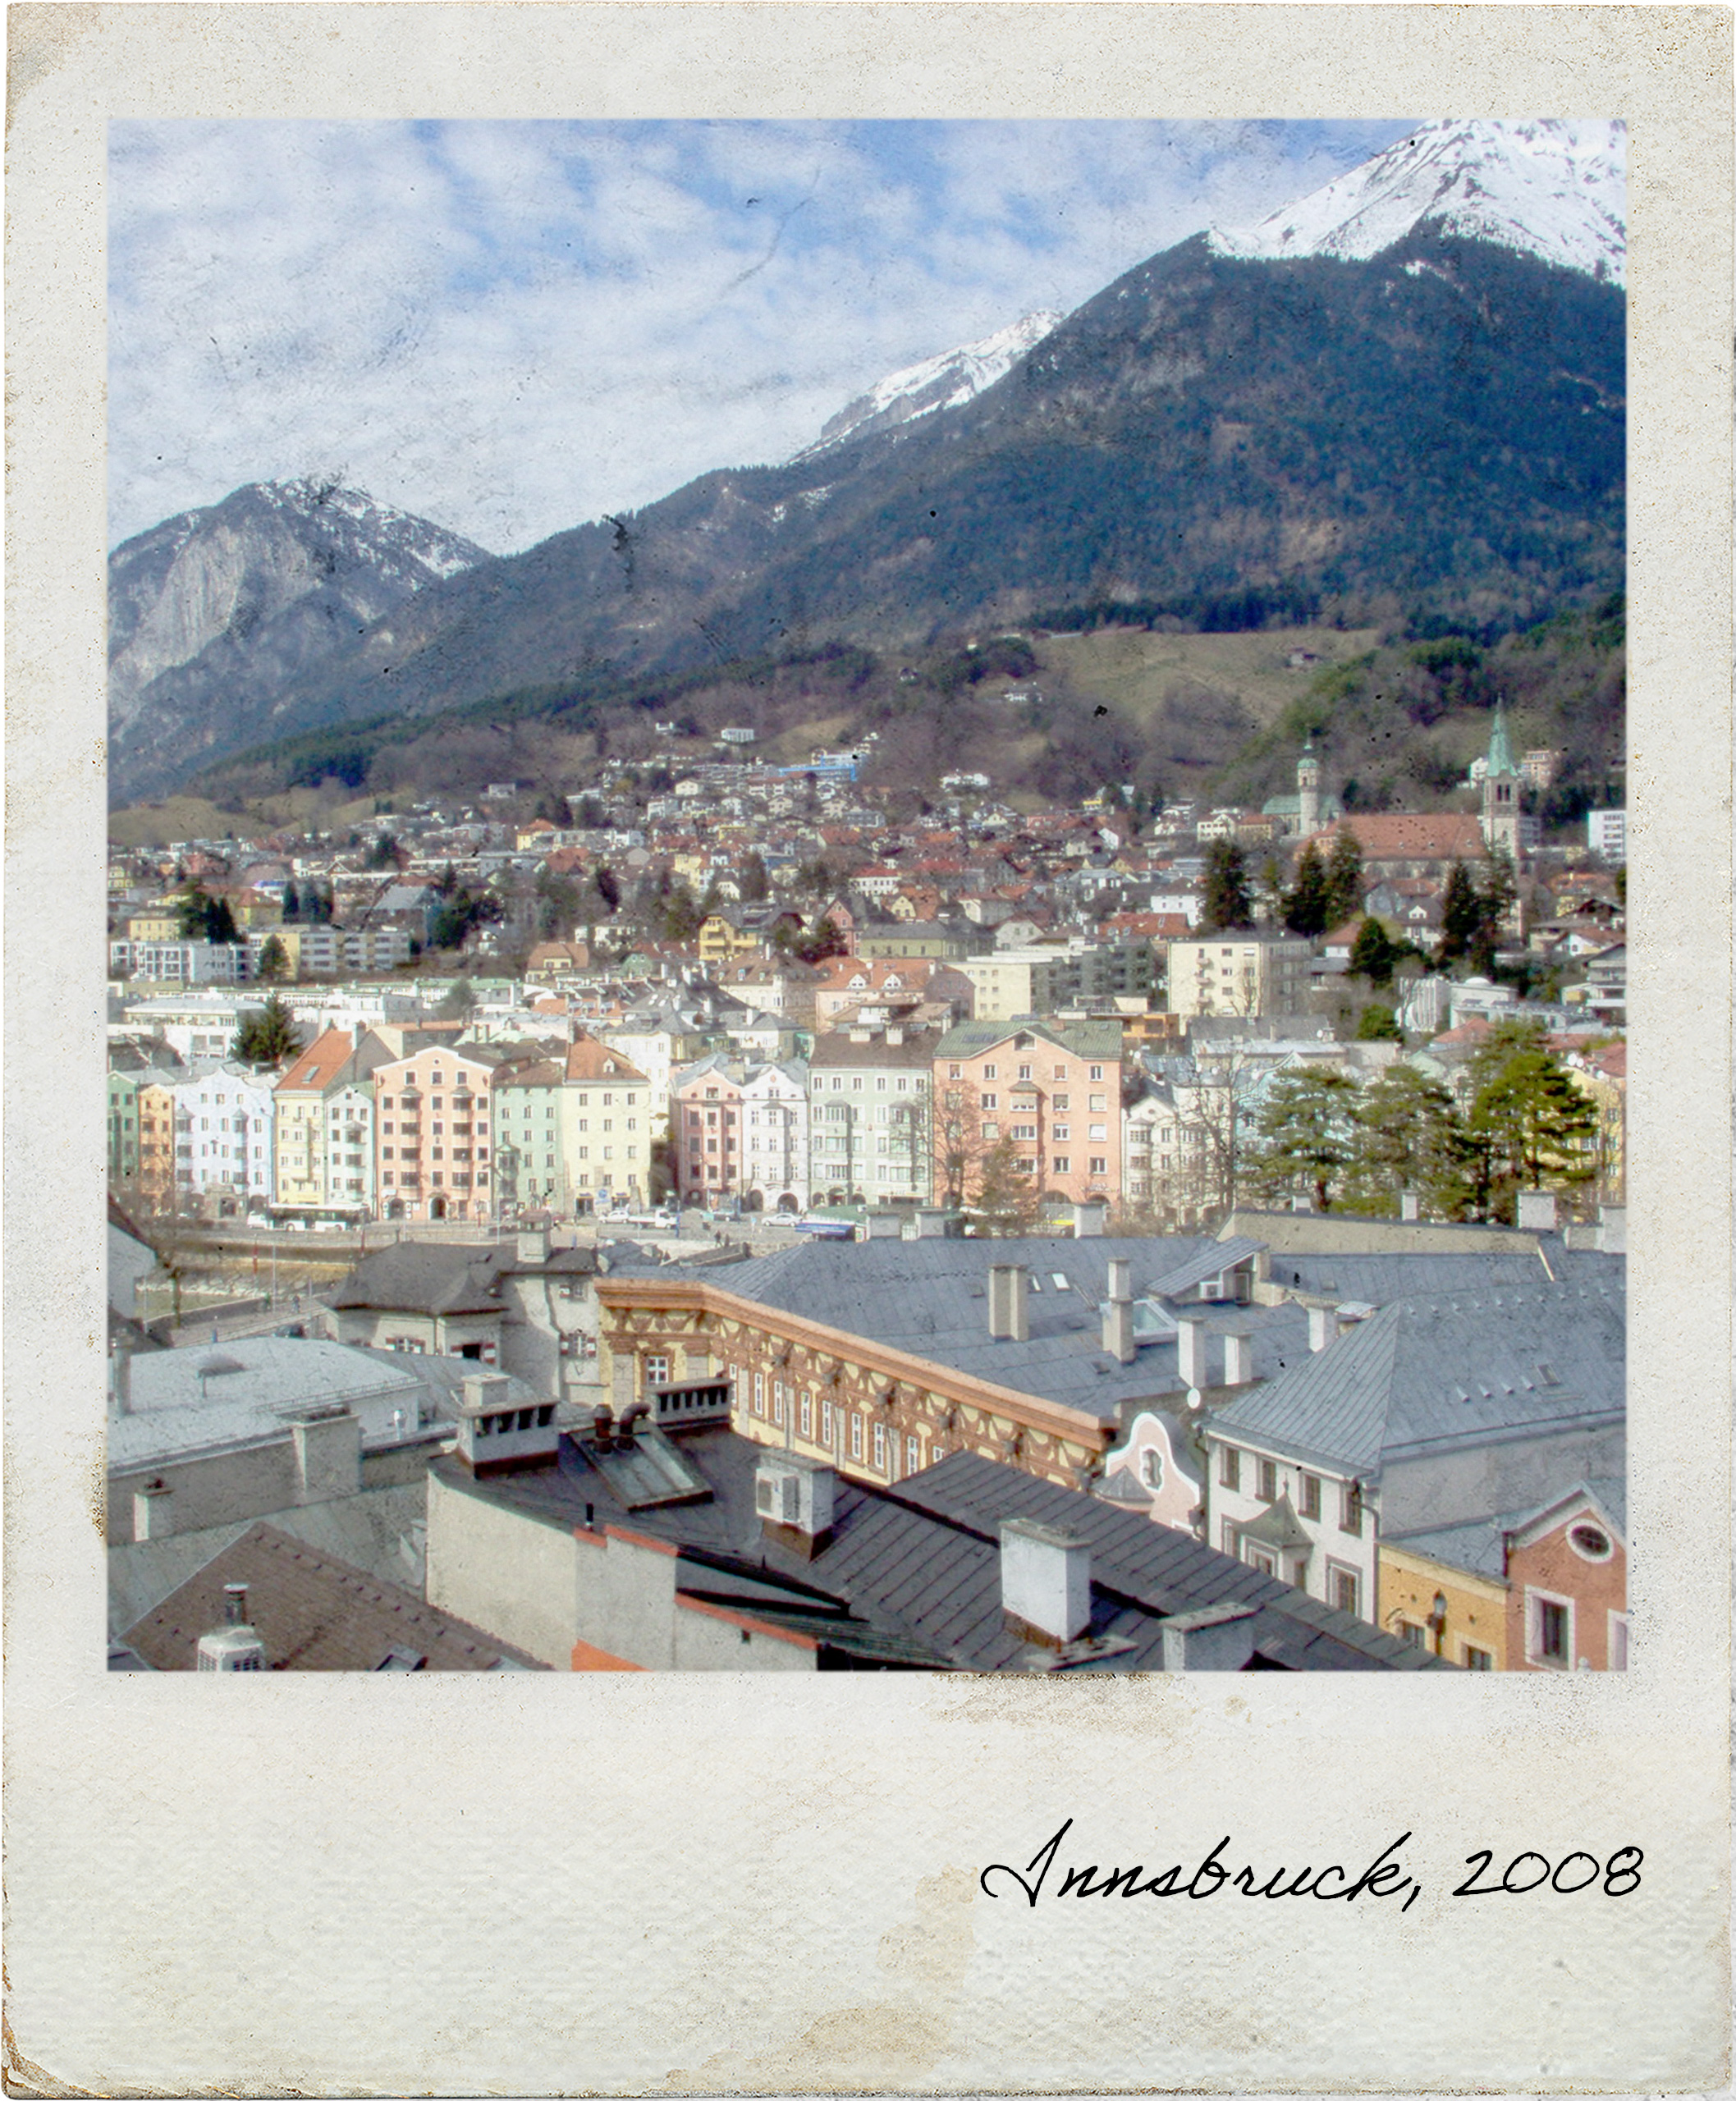 Vista em Innsbruck